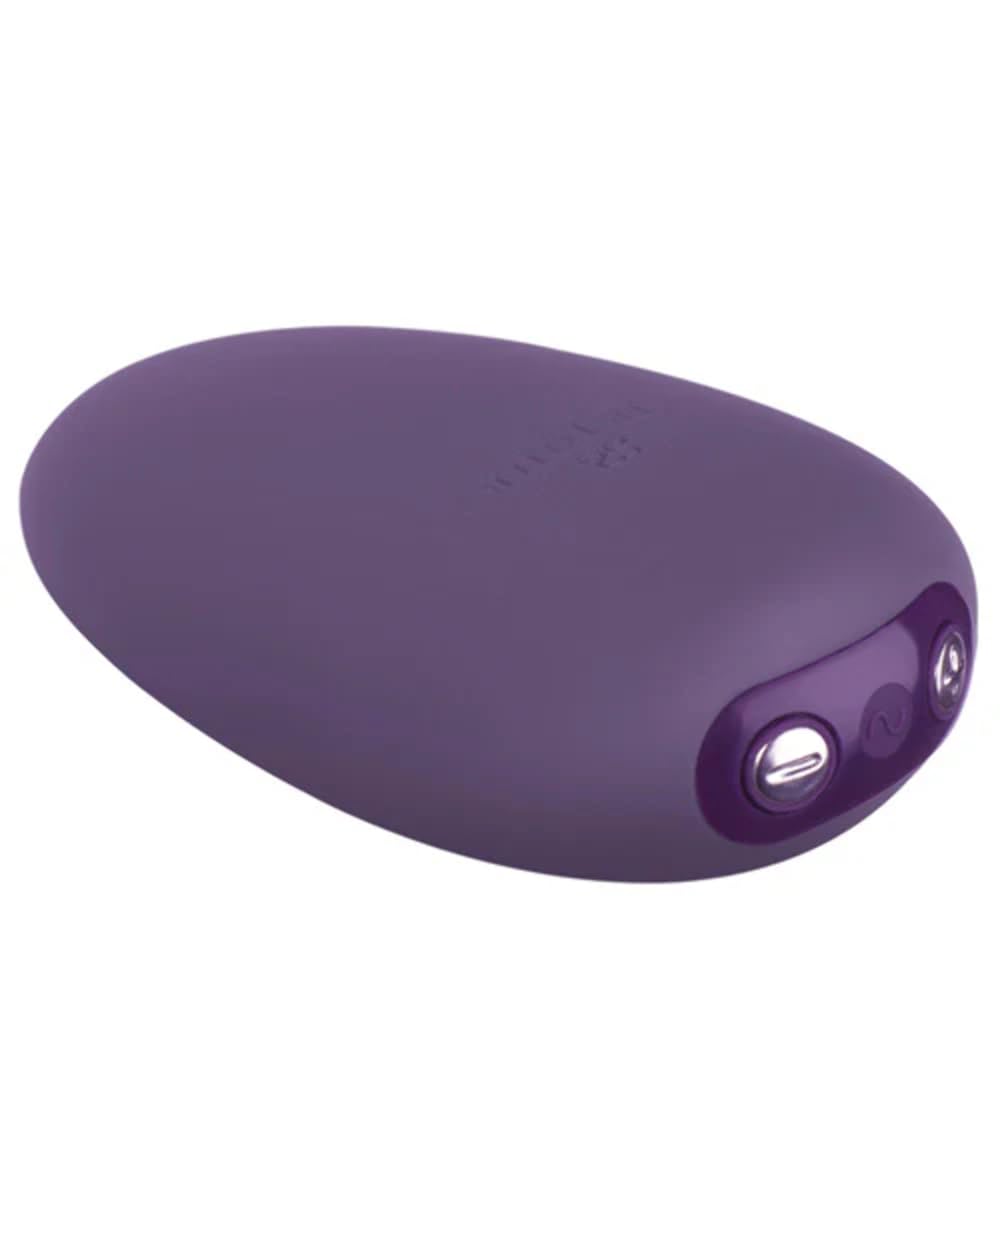 Je Joue Mimi Purple, 250 g MIM-PU-USB-VB-V2-EU